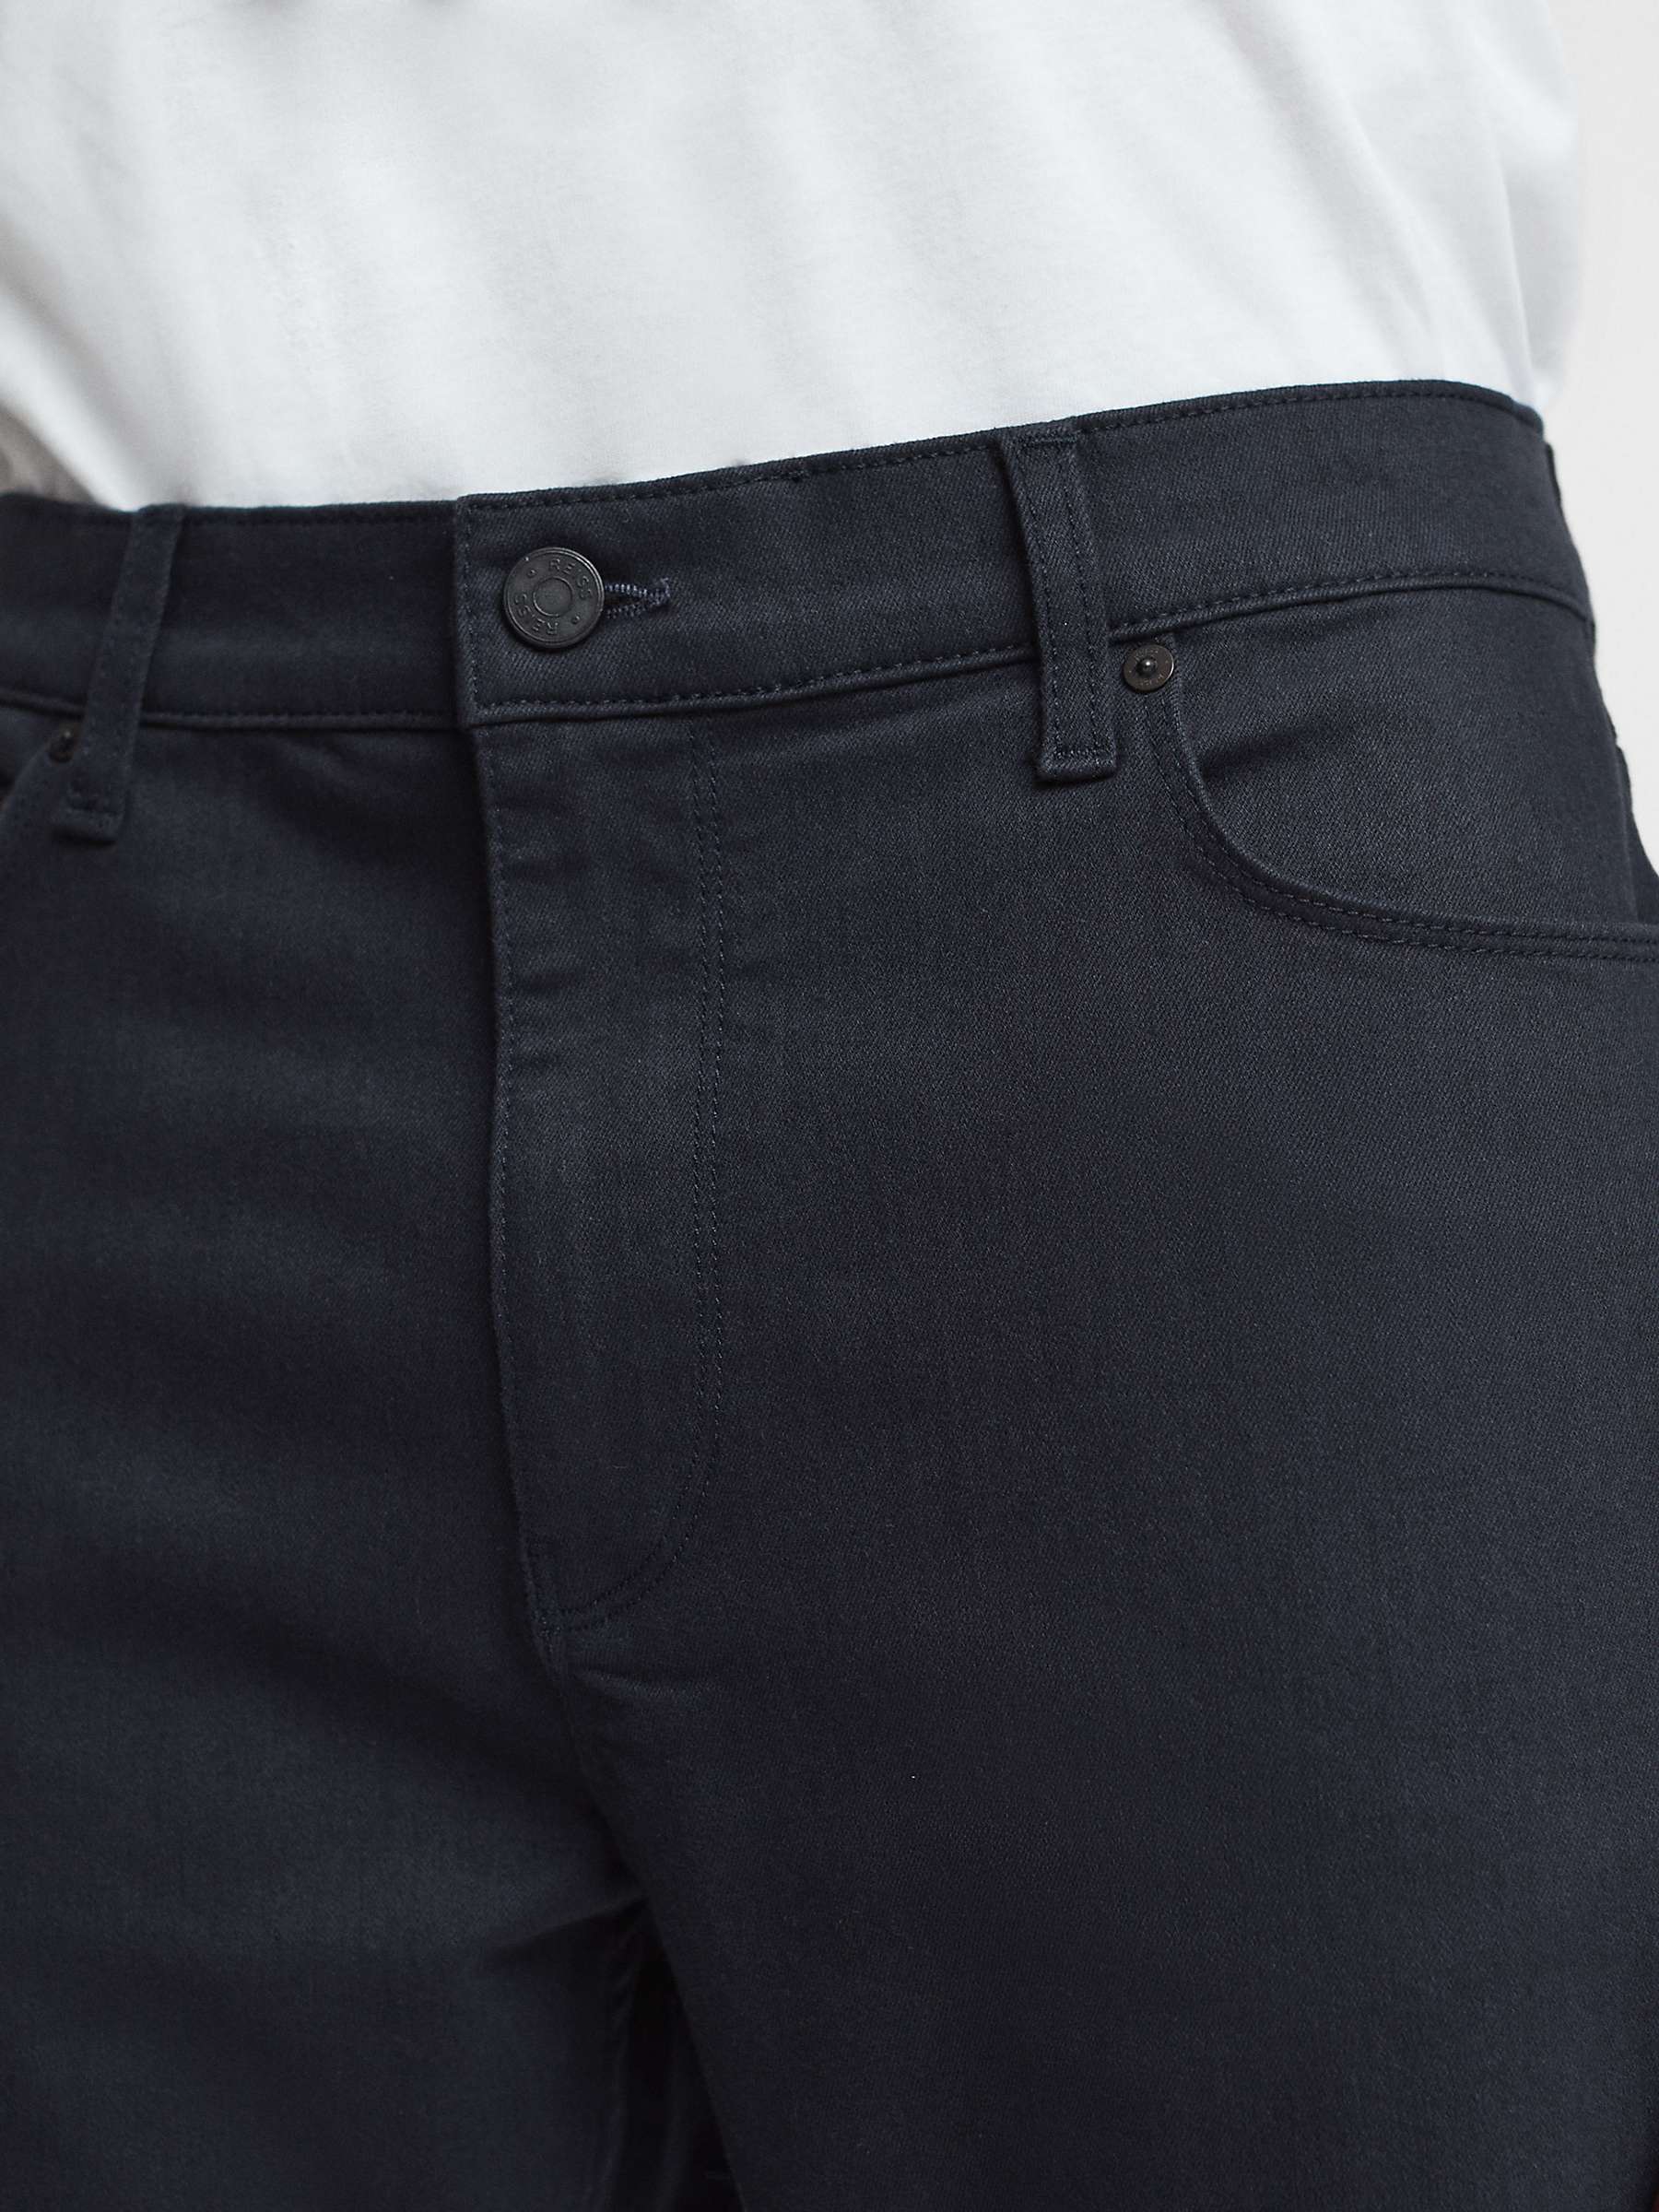 Reiss Deep Slim Fit Jeans, Indigo at John Lewis & Partners